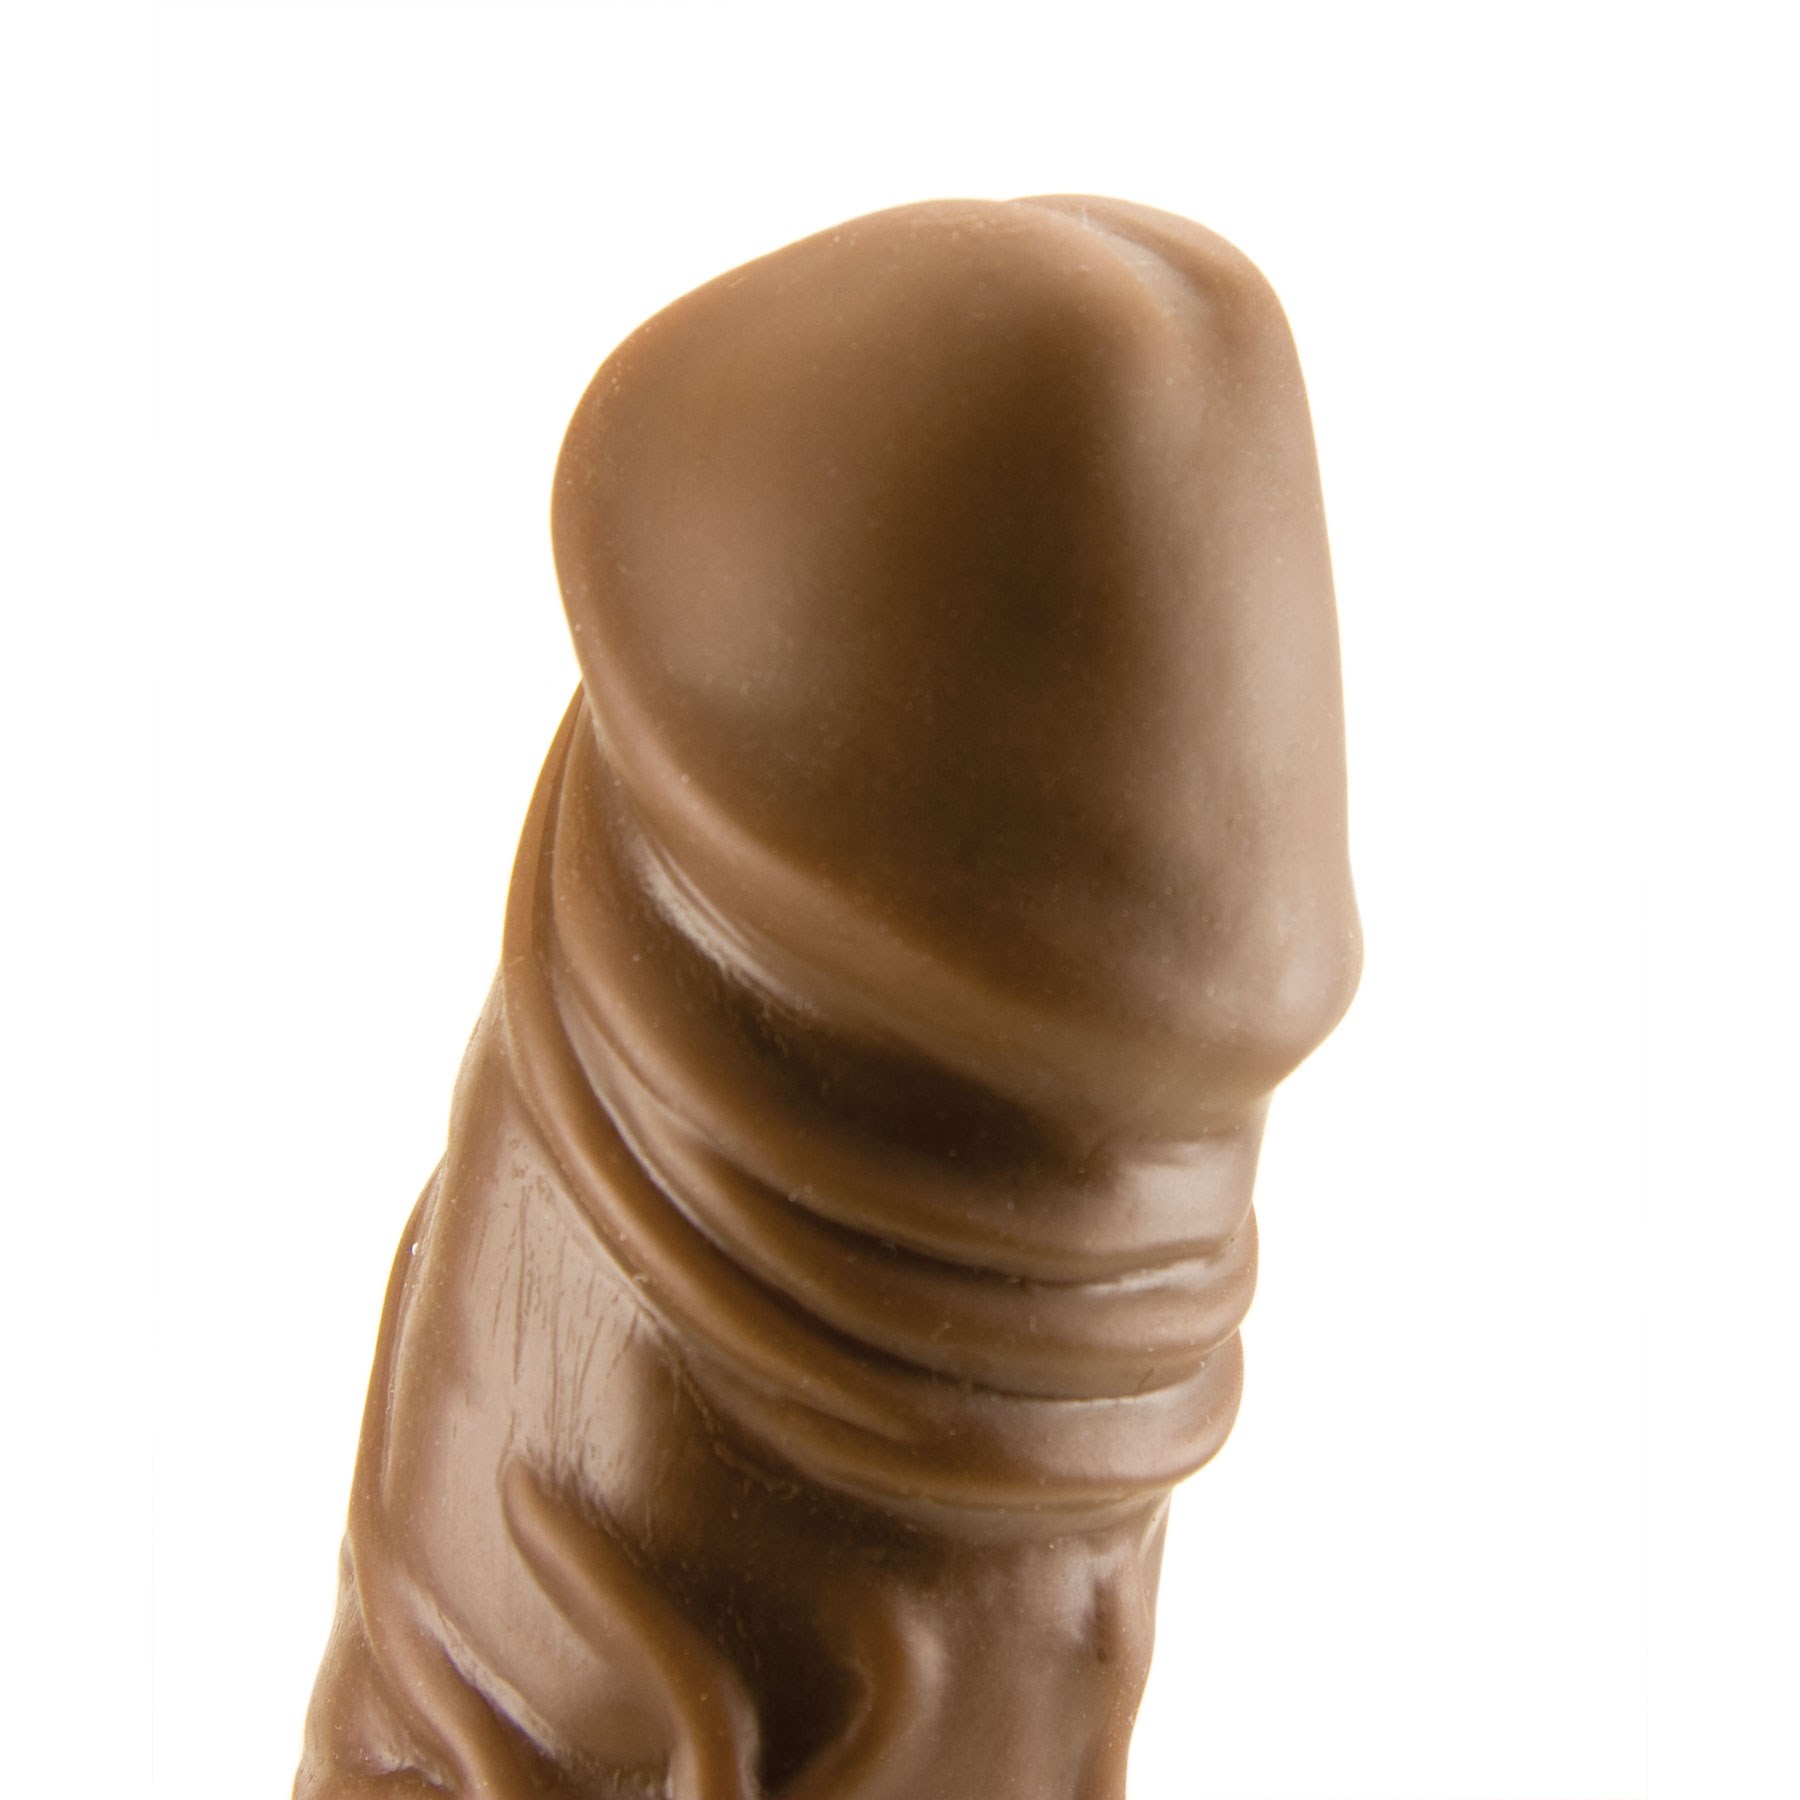 Jelly Chocolate Dream Vibrator close up of head